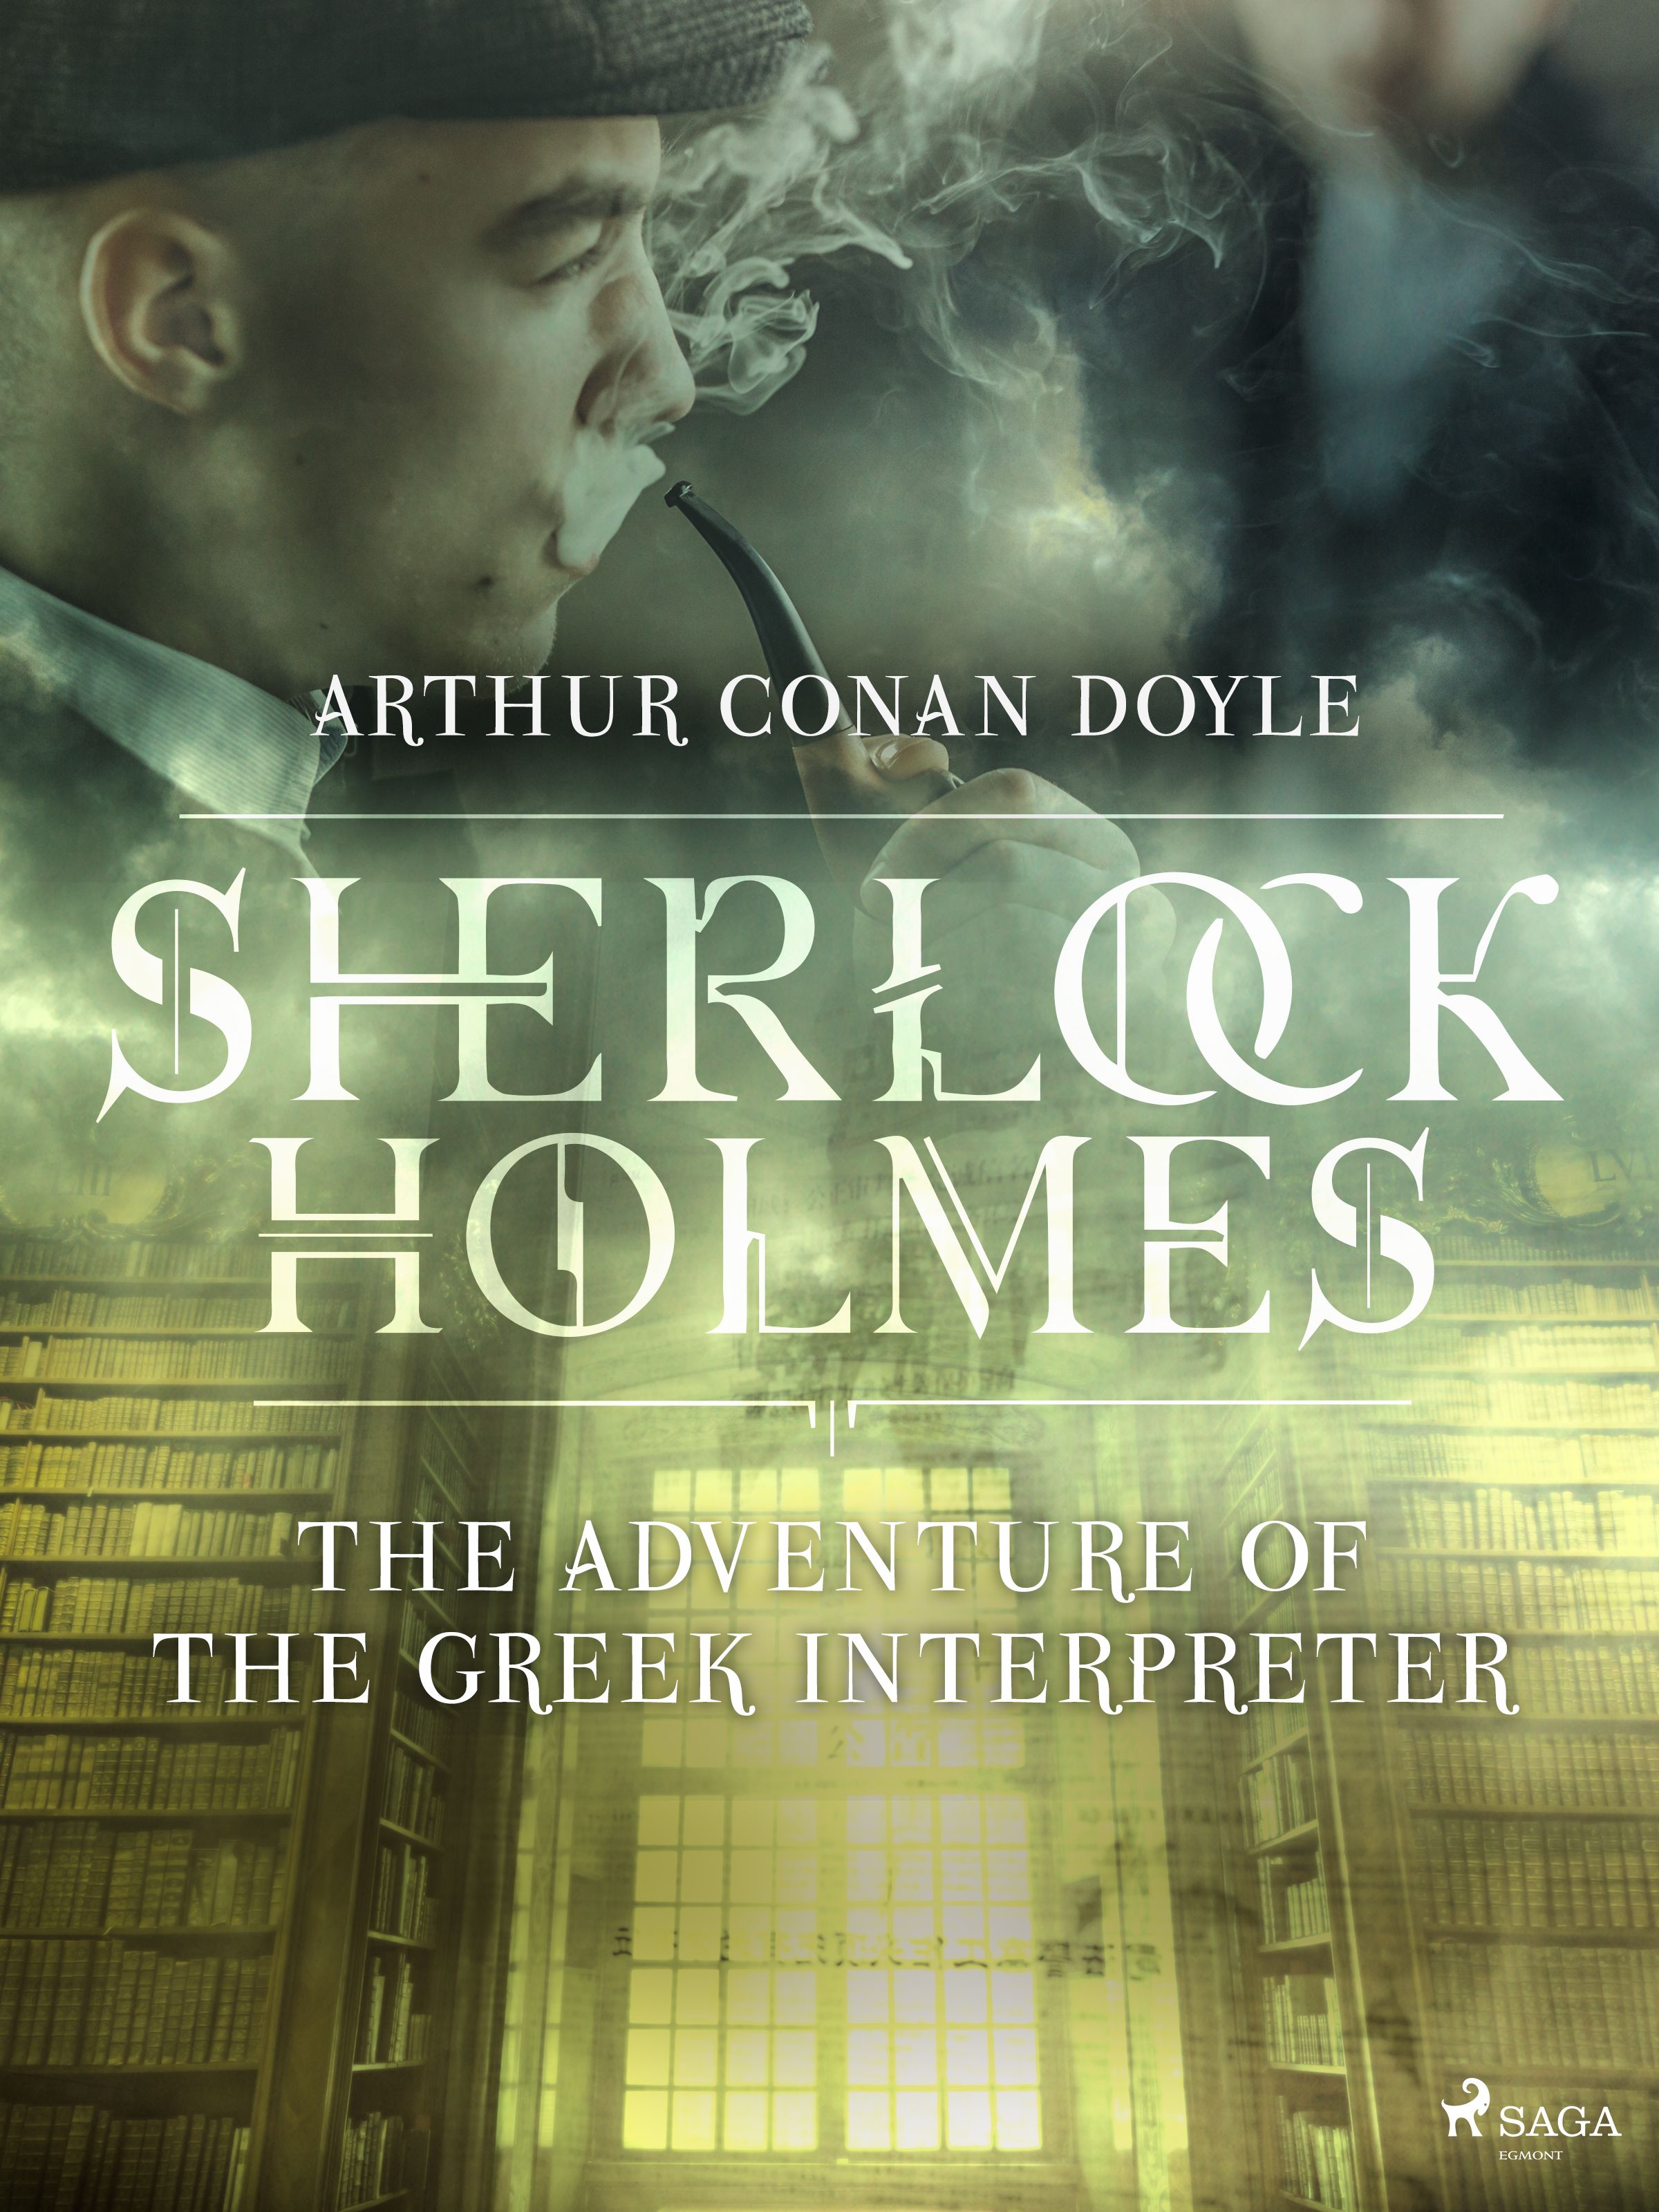 The Adventure of the Greek Interpreter, e-bog af Arthur Conan Doyle